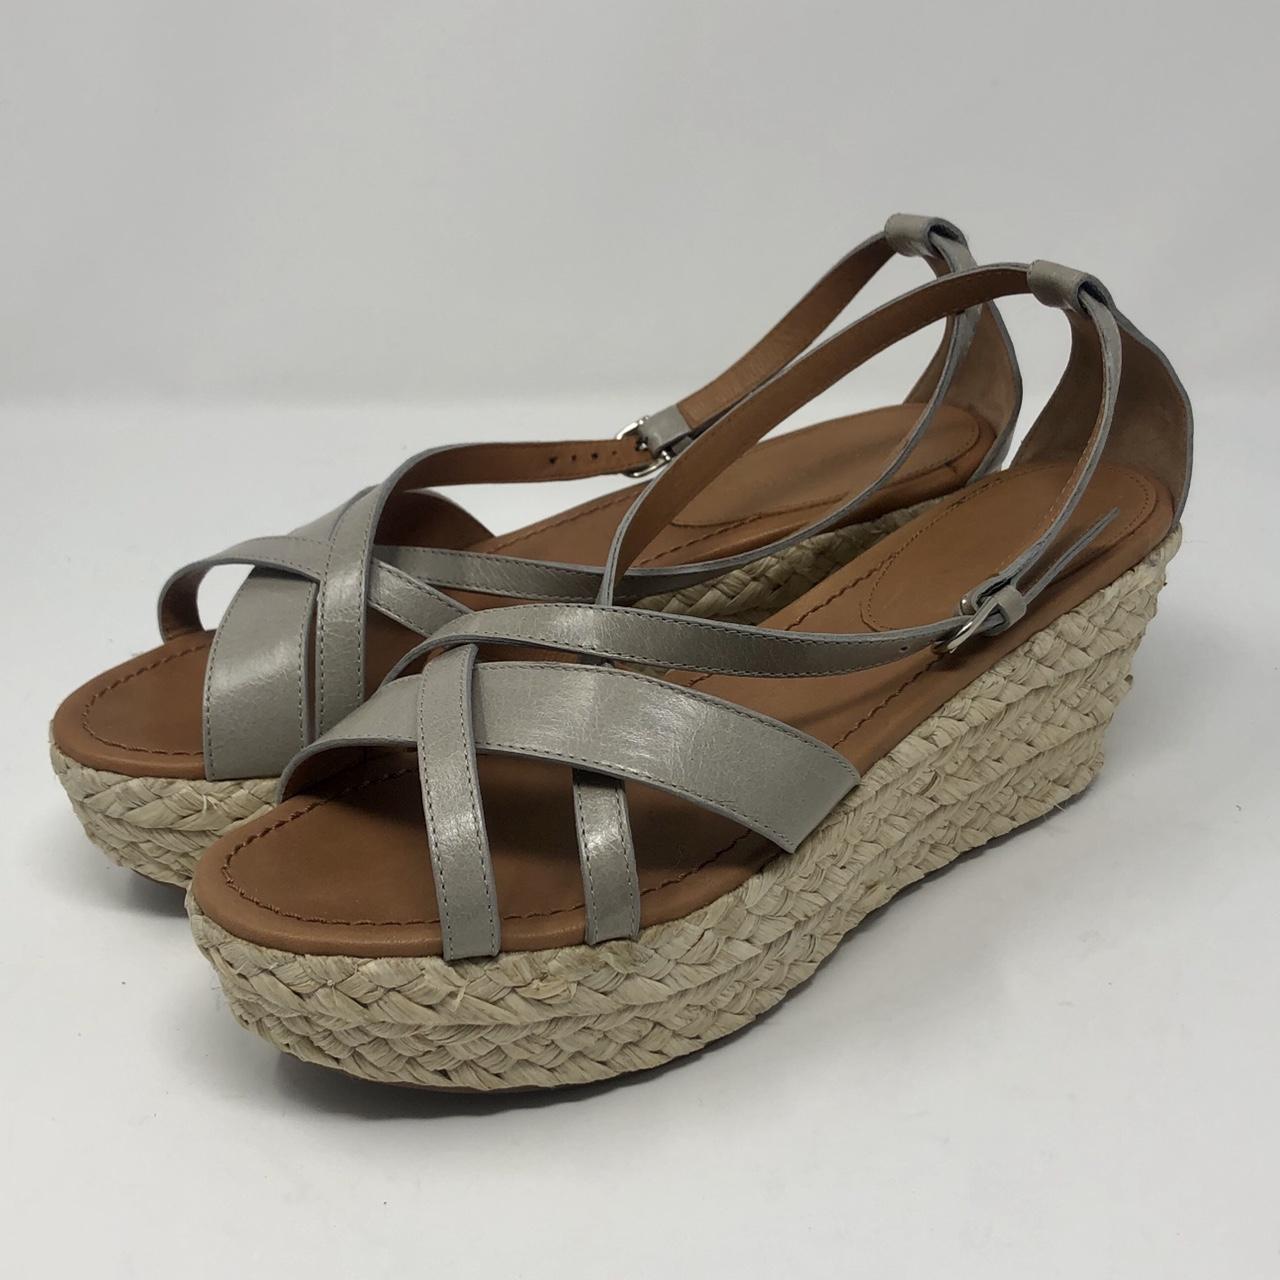 Armani Women's Tan and Grey Sandals